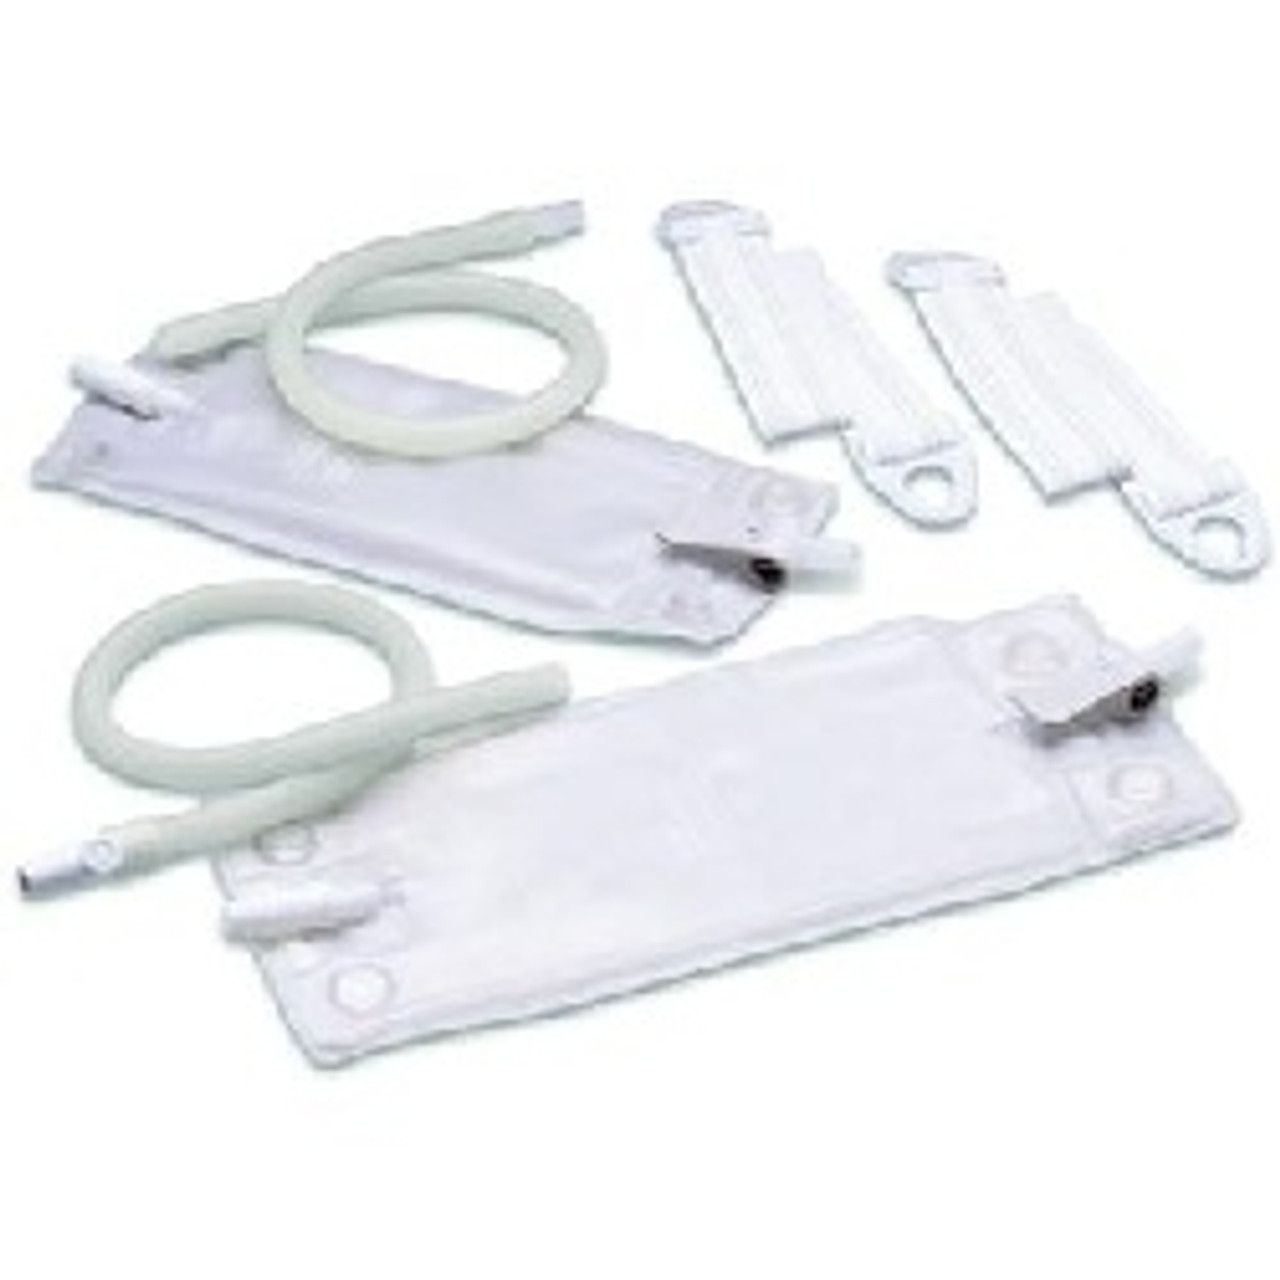 Hollister Leg Bag Systems - A9270 - Ea - 18 fl oz - Urinary Leg Bag (Bag ONLY) - Medium: 10" (Ref. # 9814)